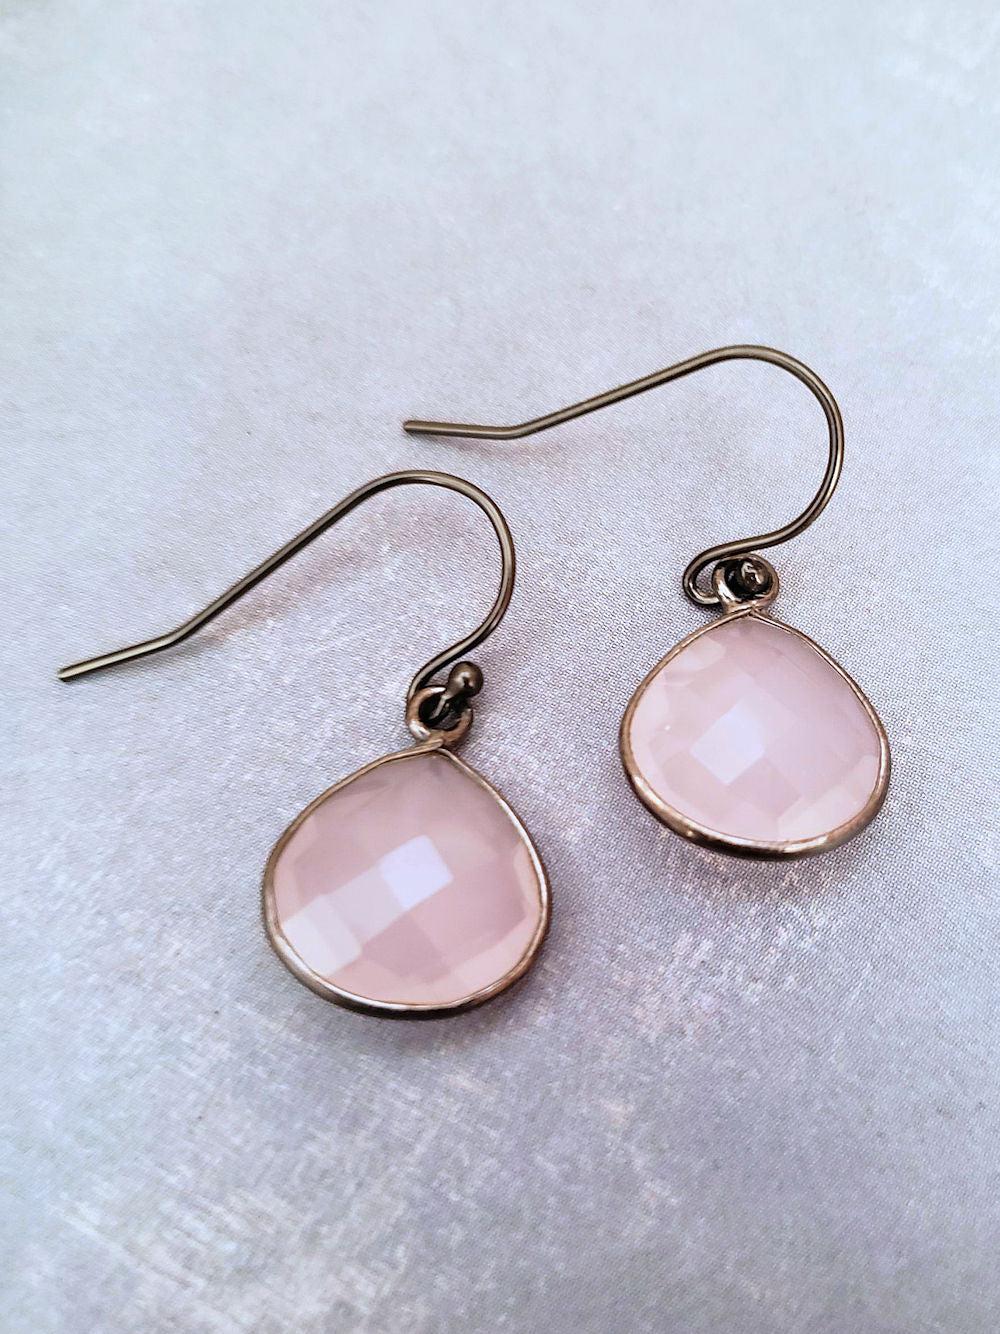 Rose Quartz Earrings - Pear Drop in Silver or 18K Gold over Silver  Summer Indigo 